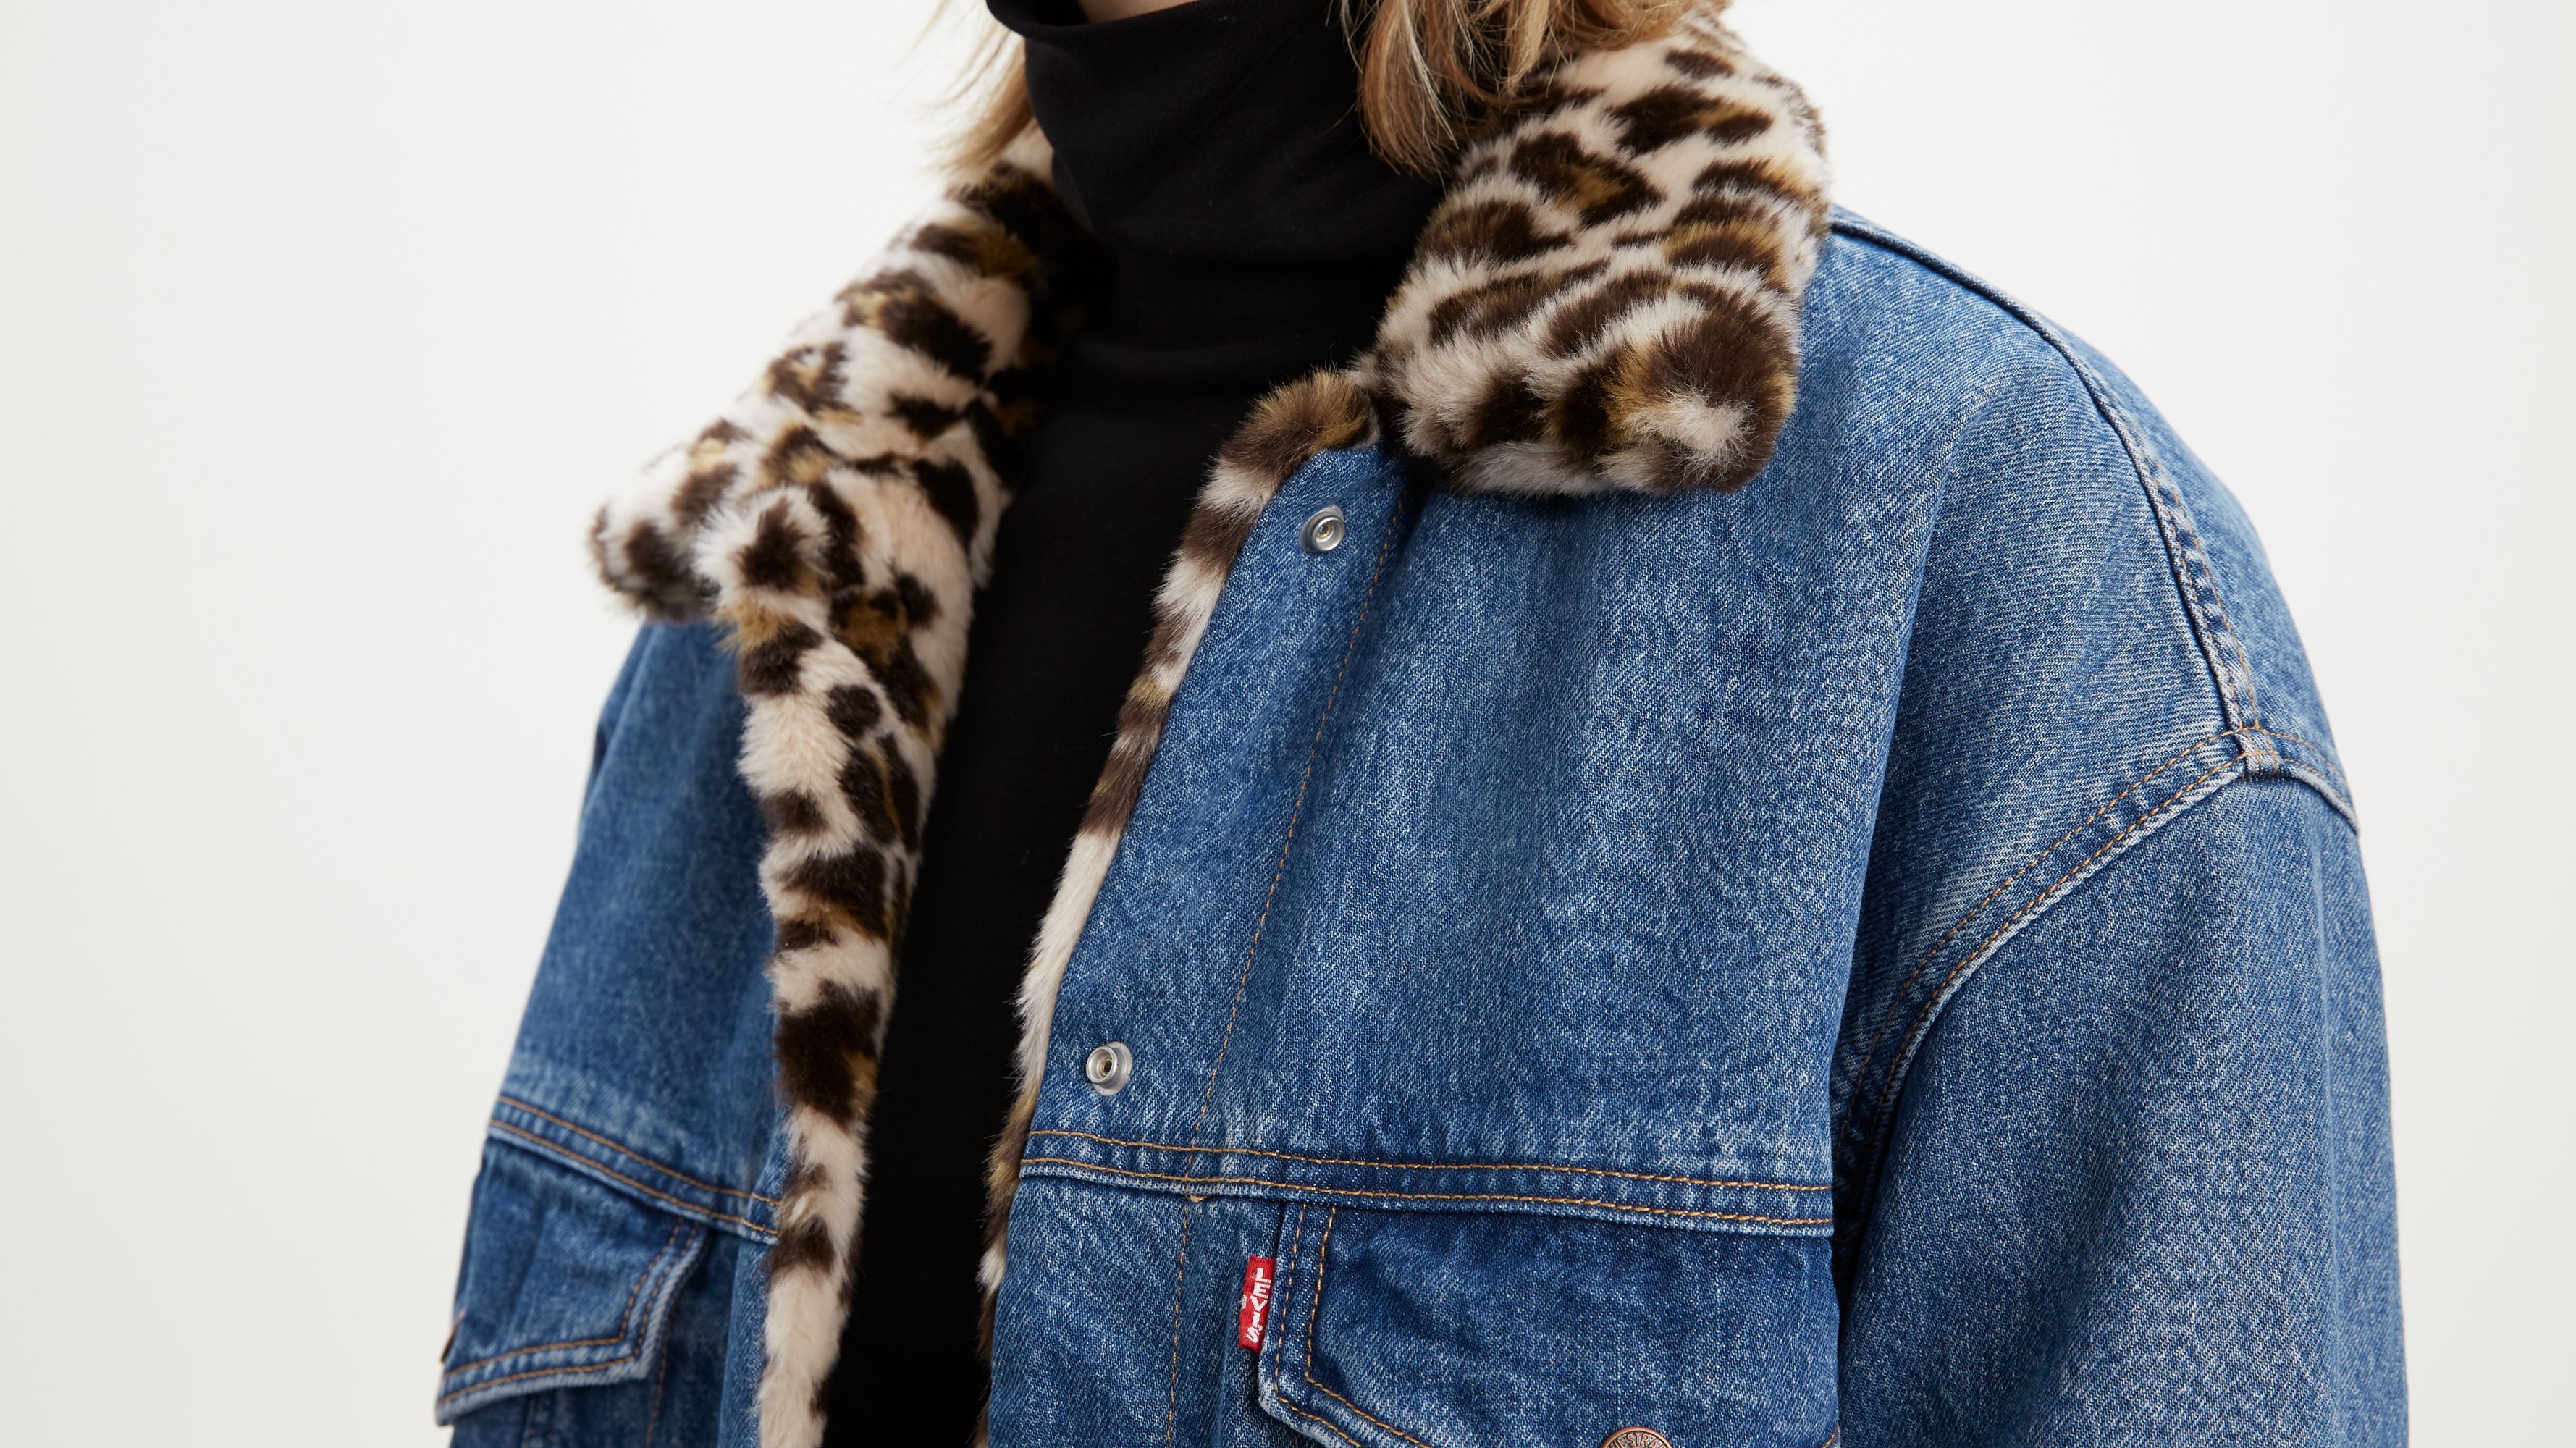 Ragdoll Los Angeles Denim Jacket with Leopard Faux Fur Lining